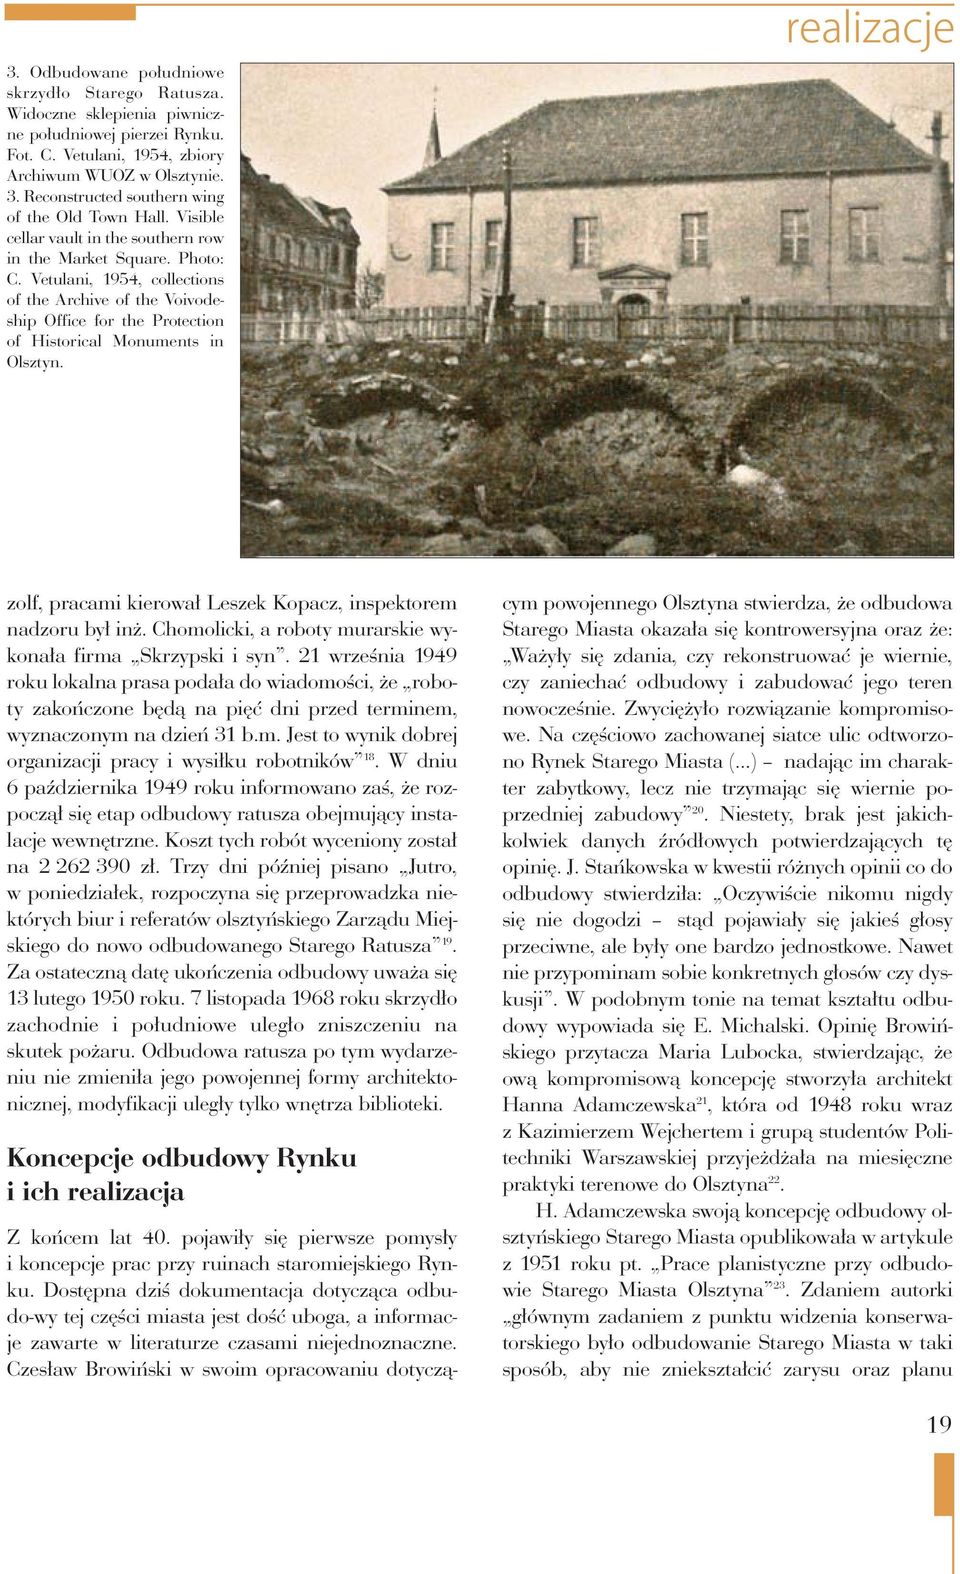 Vetulani, 1954, collections of the Archive of the Voivodeship Office for the Protection of Historical Monuments in Olsztyn. zolf, pracami kierował Leszek Kopacz, inspektorem nadzoru był inż.